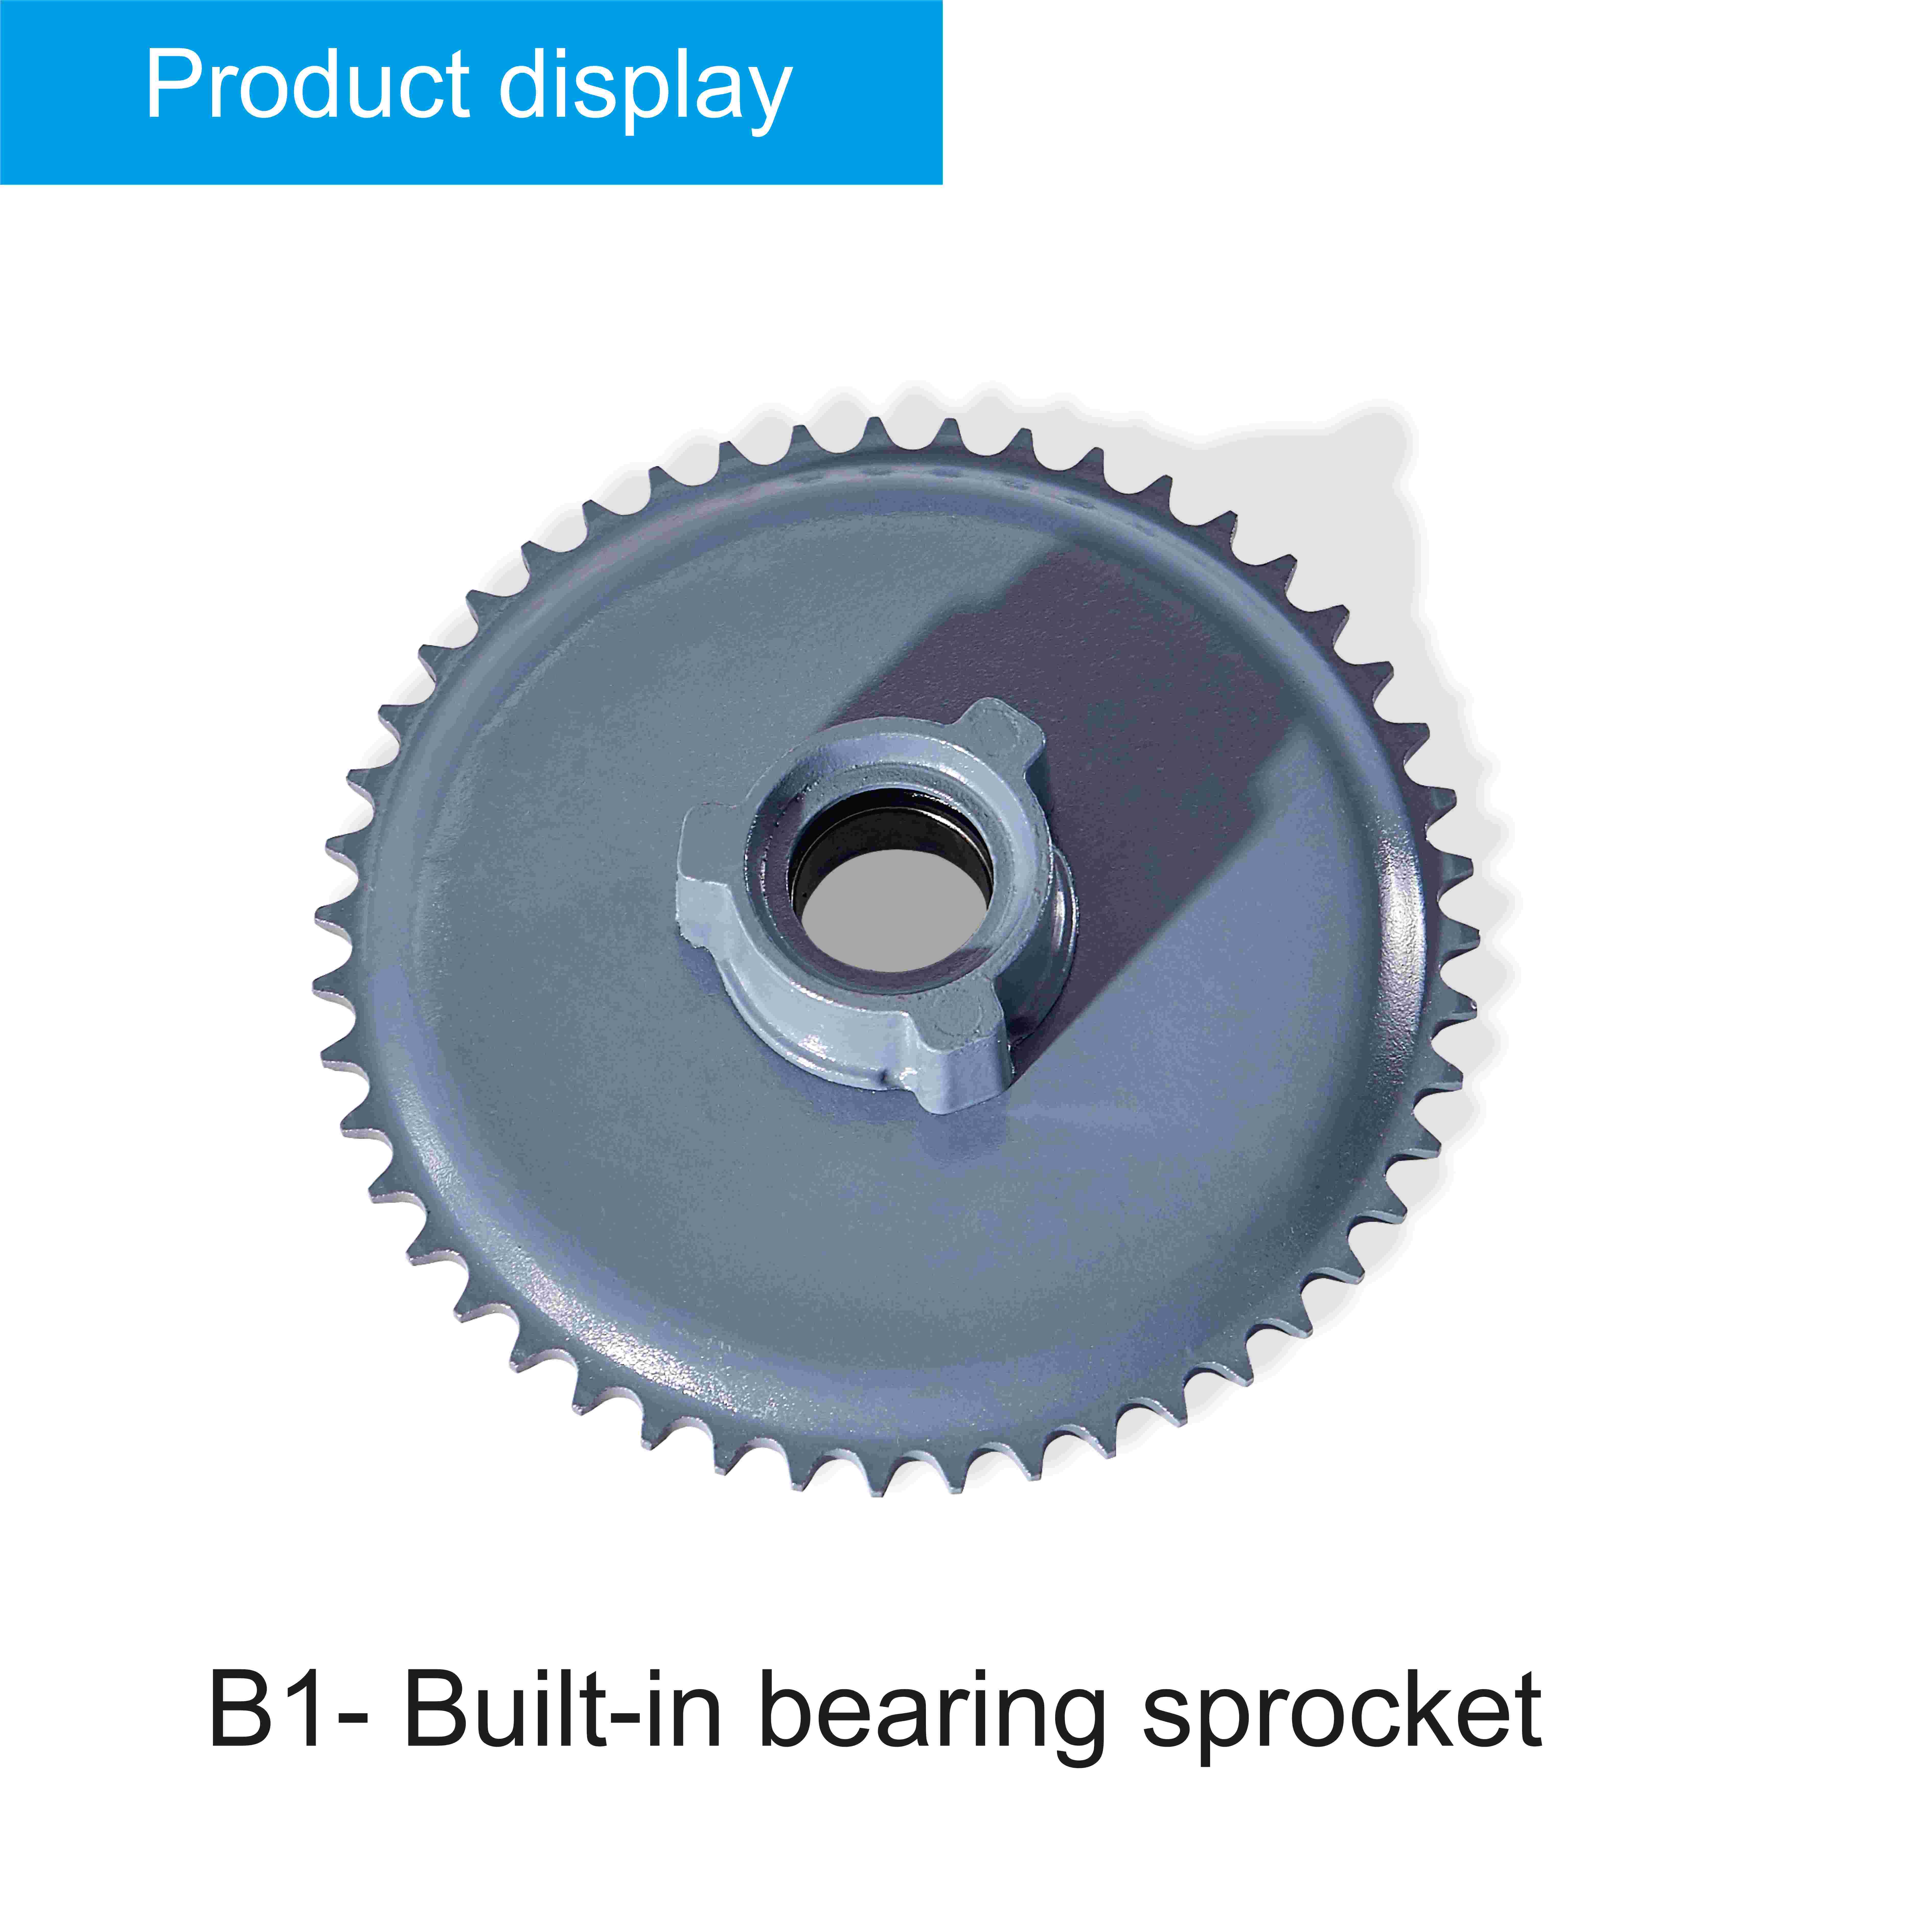 B1 သည် bearing sprocket-1 တွင်တည်ဆောက်ထားသည်။